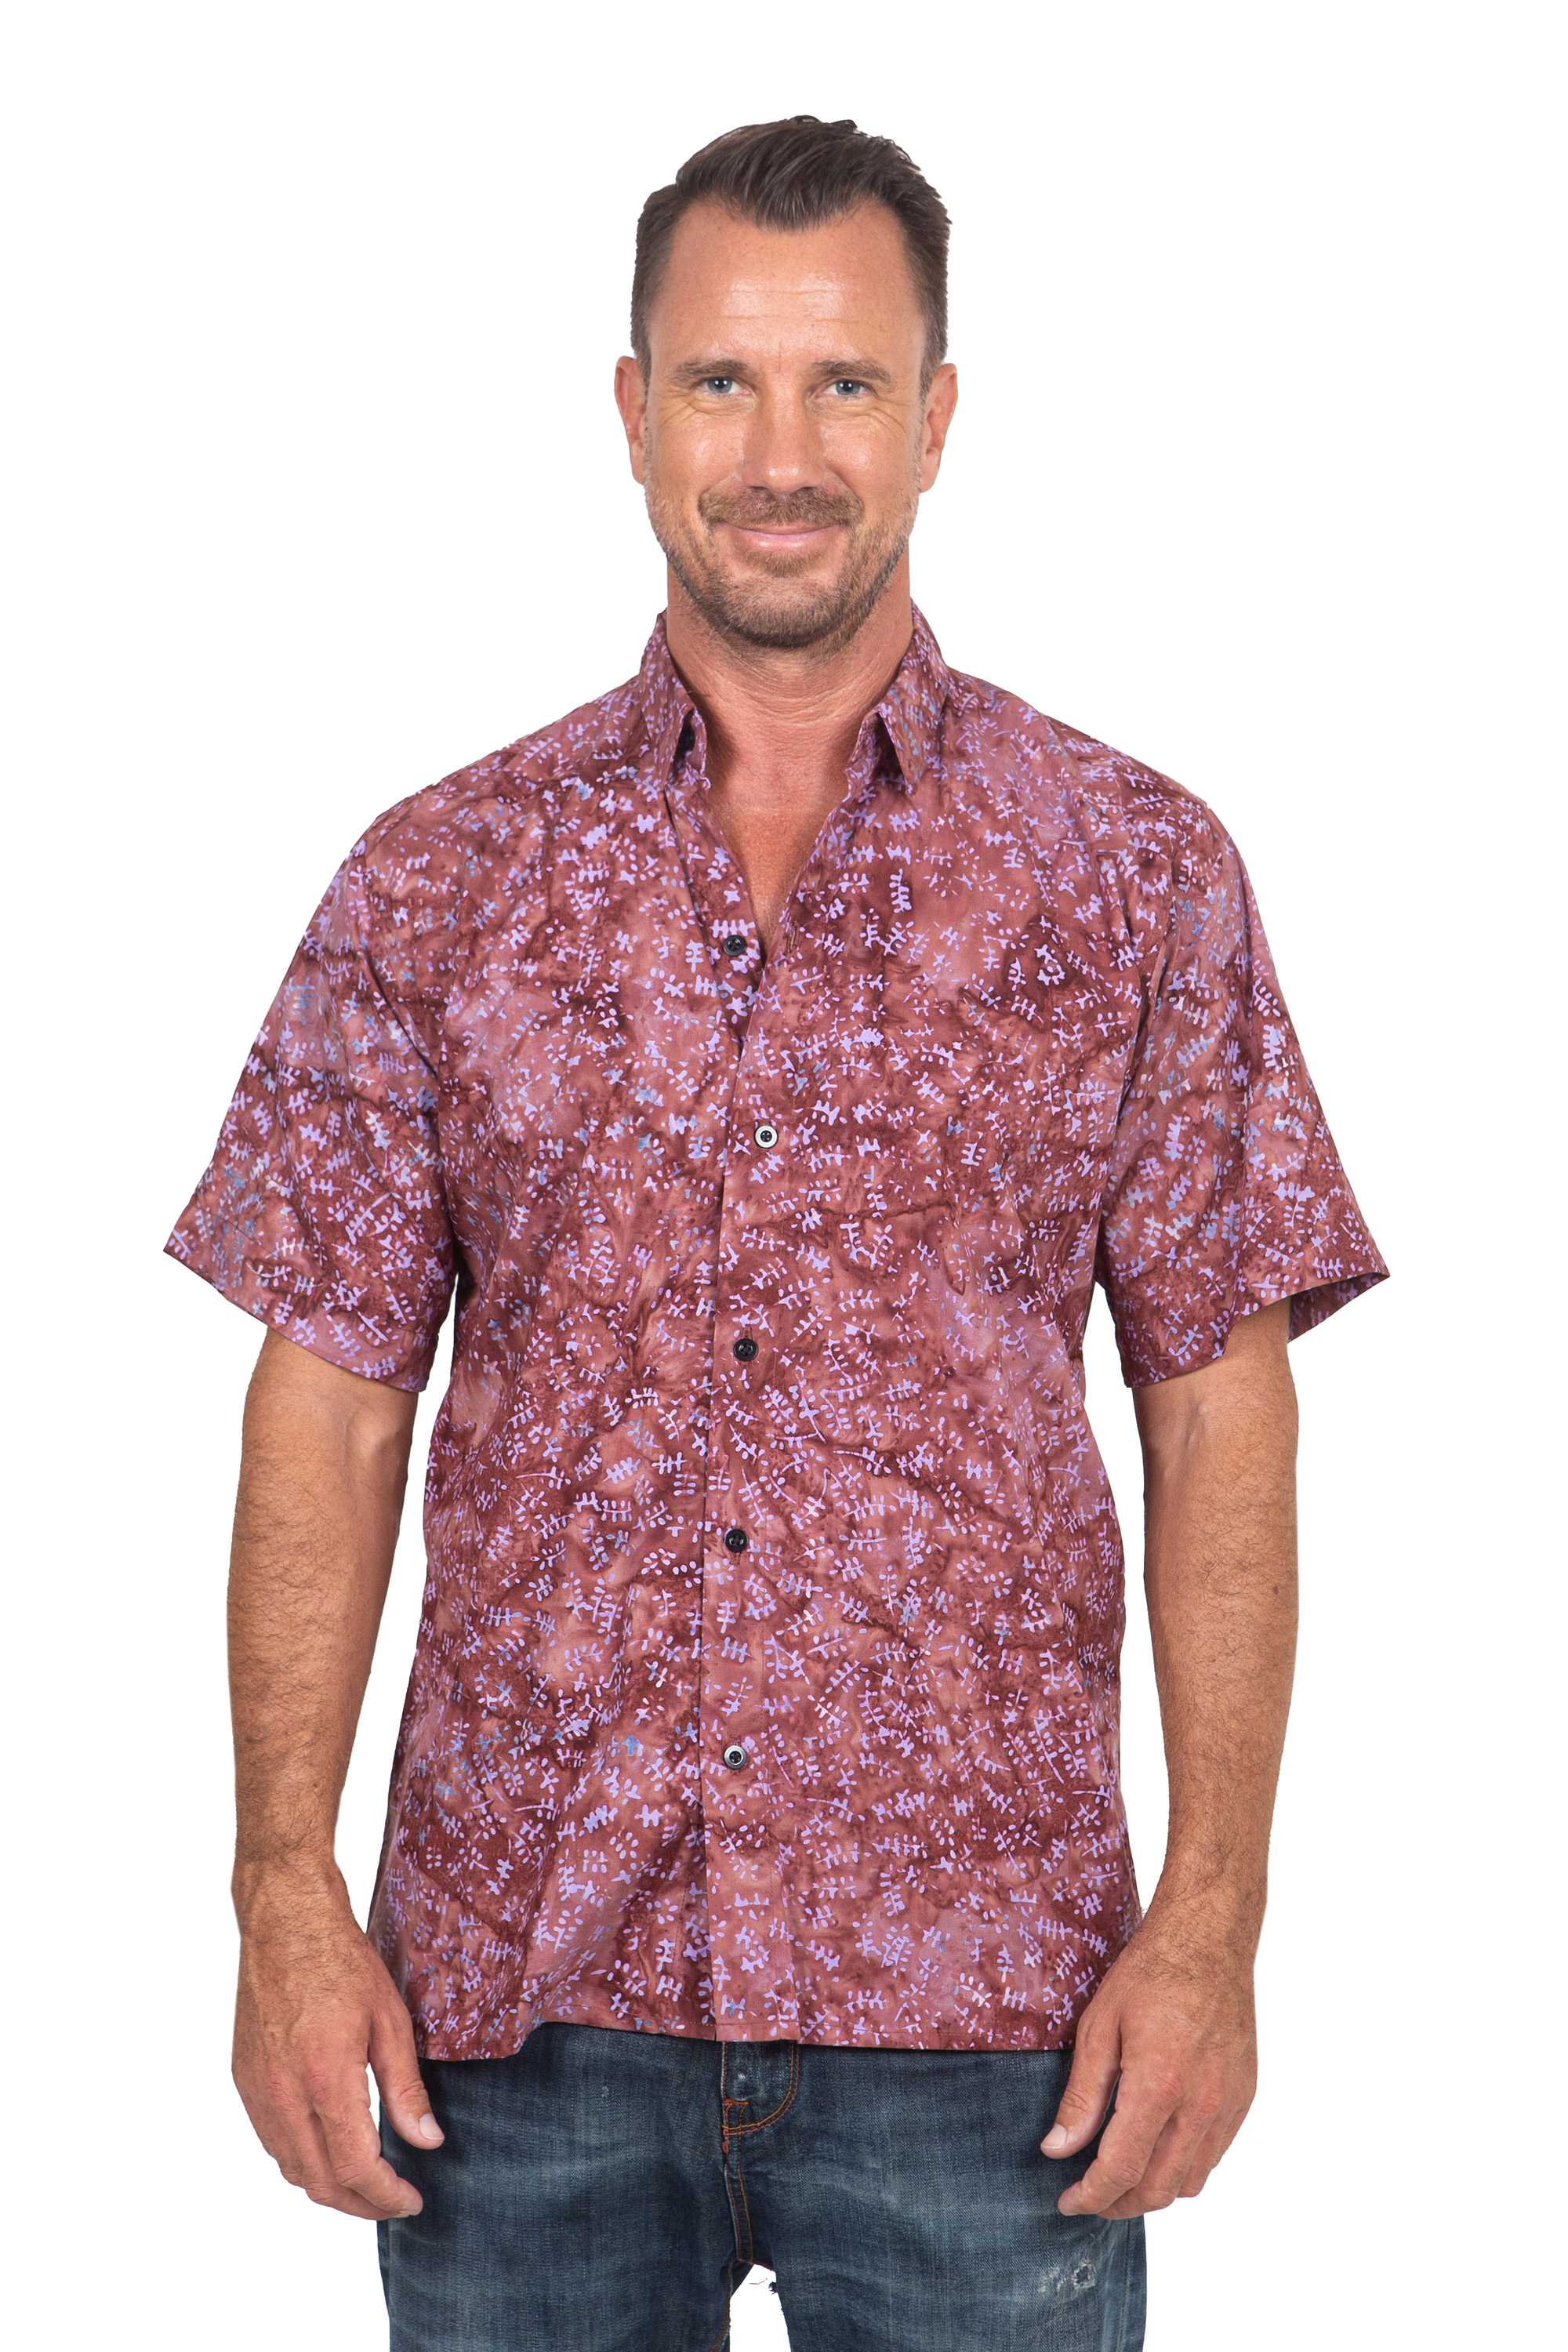 100% Cotton Batik T-Shirt  Batik design, Batik, Handmade